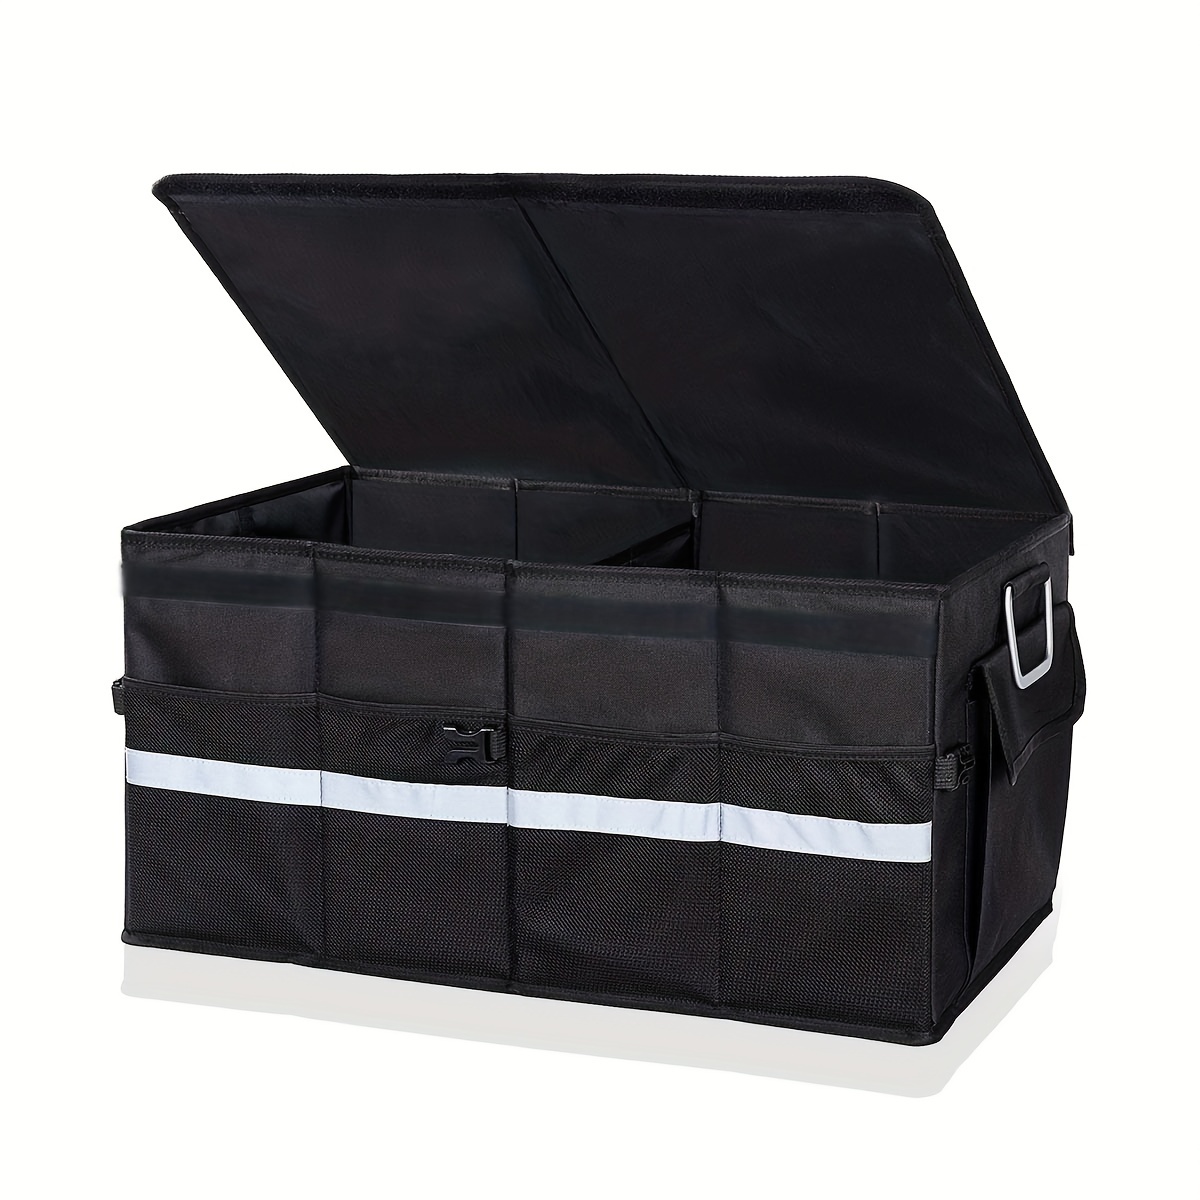  Einesin Organizador Maletero Coche Colgante con 9 bolsillos,  Organizador Furgoneta, Organizador Coche Impermeable Plegable,108 x 52 cm,  Color Negro